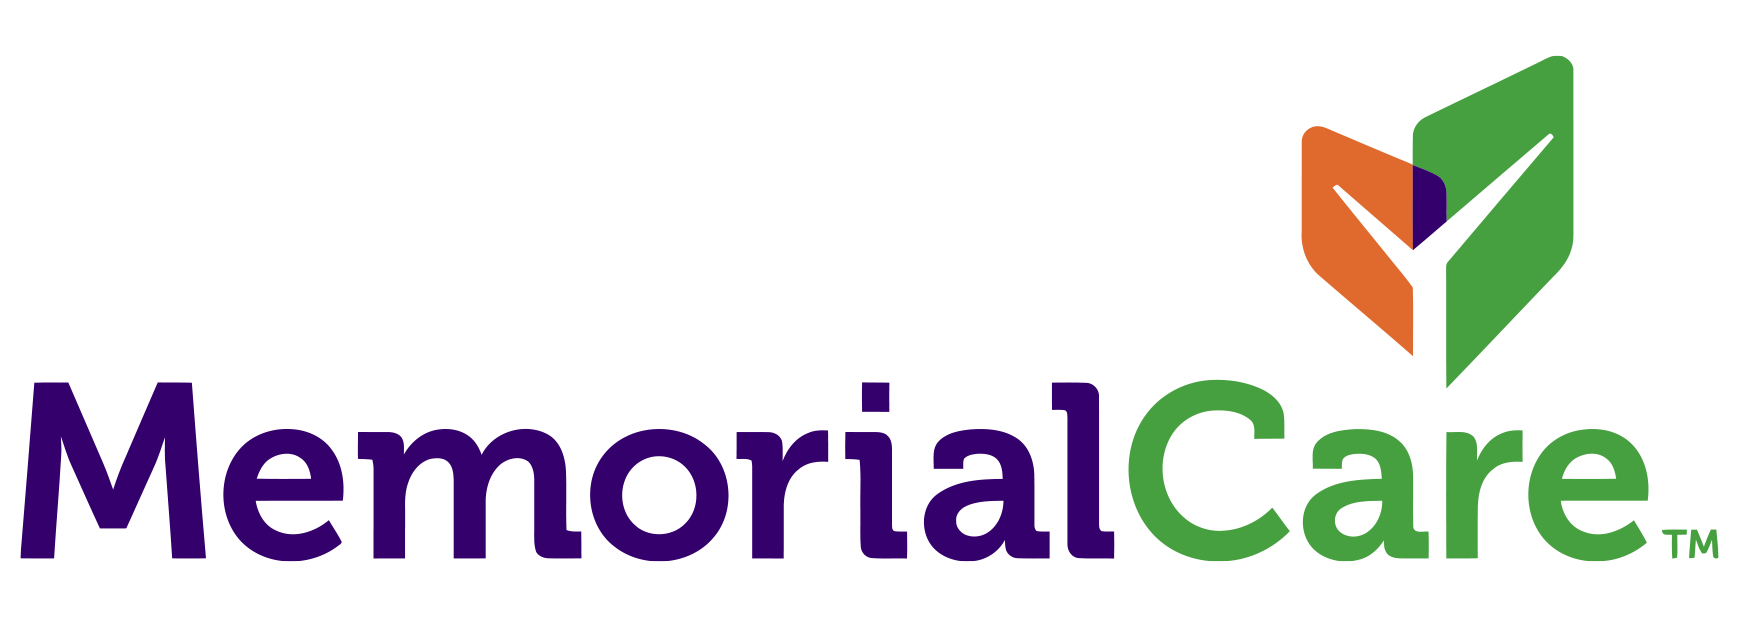 Memorial Care logo